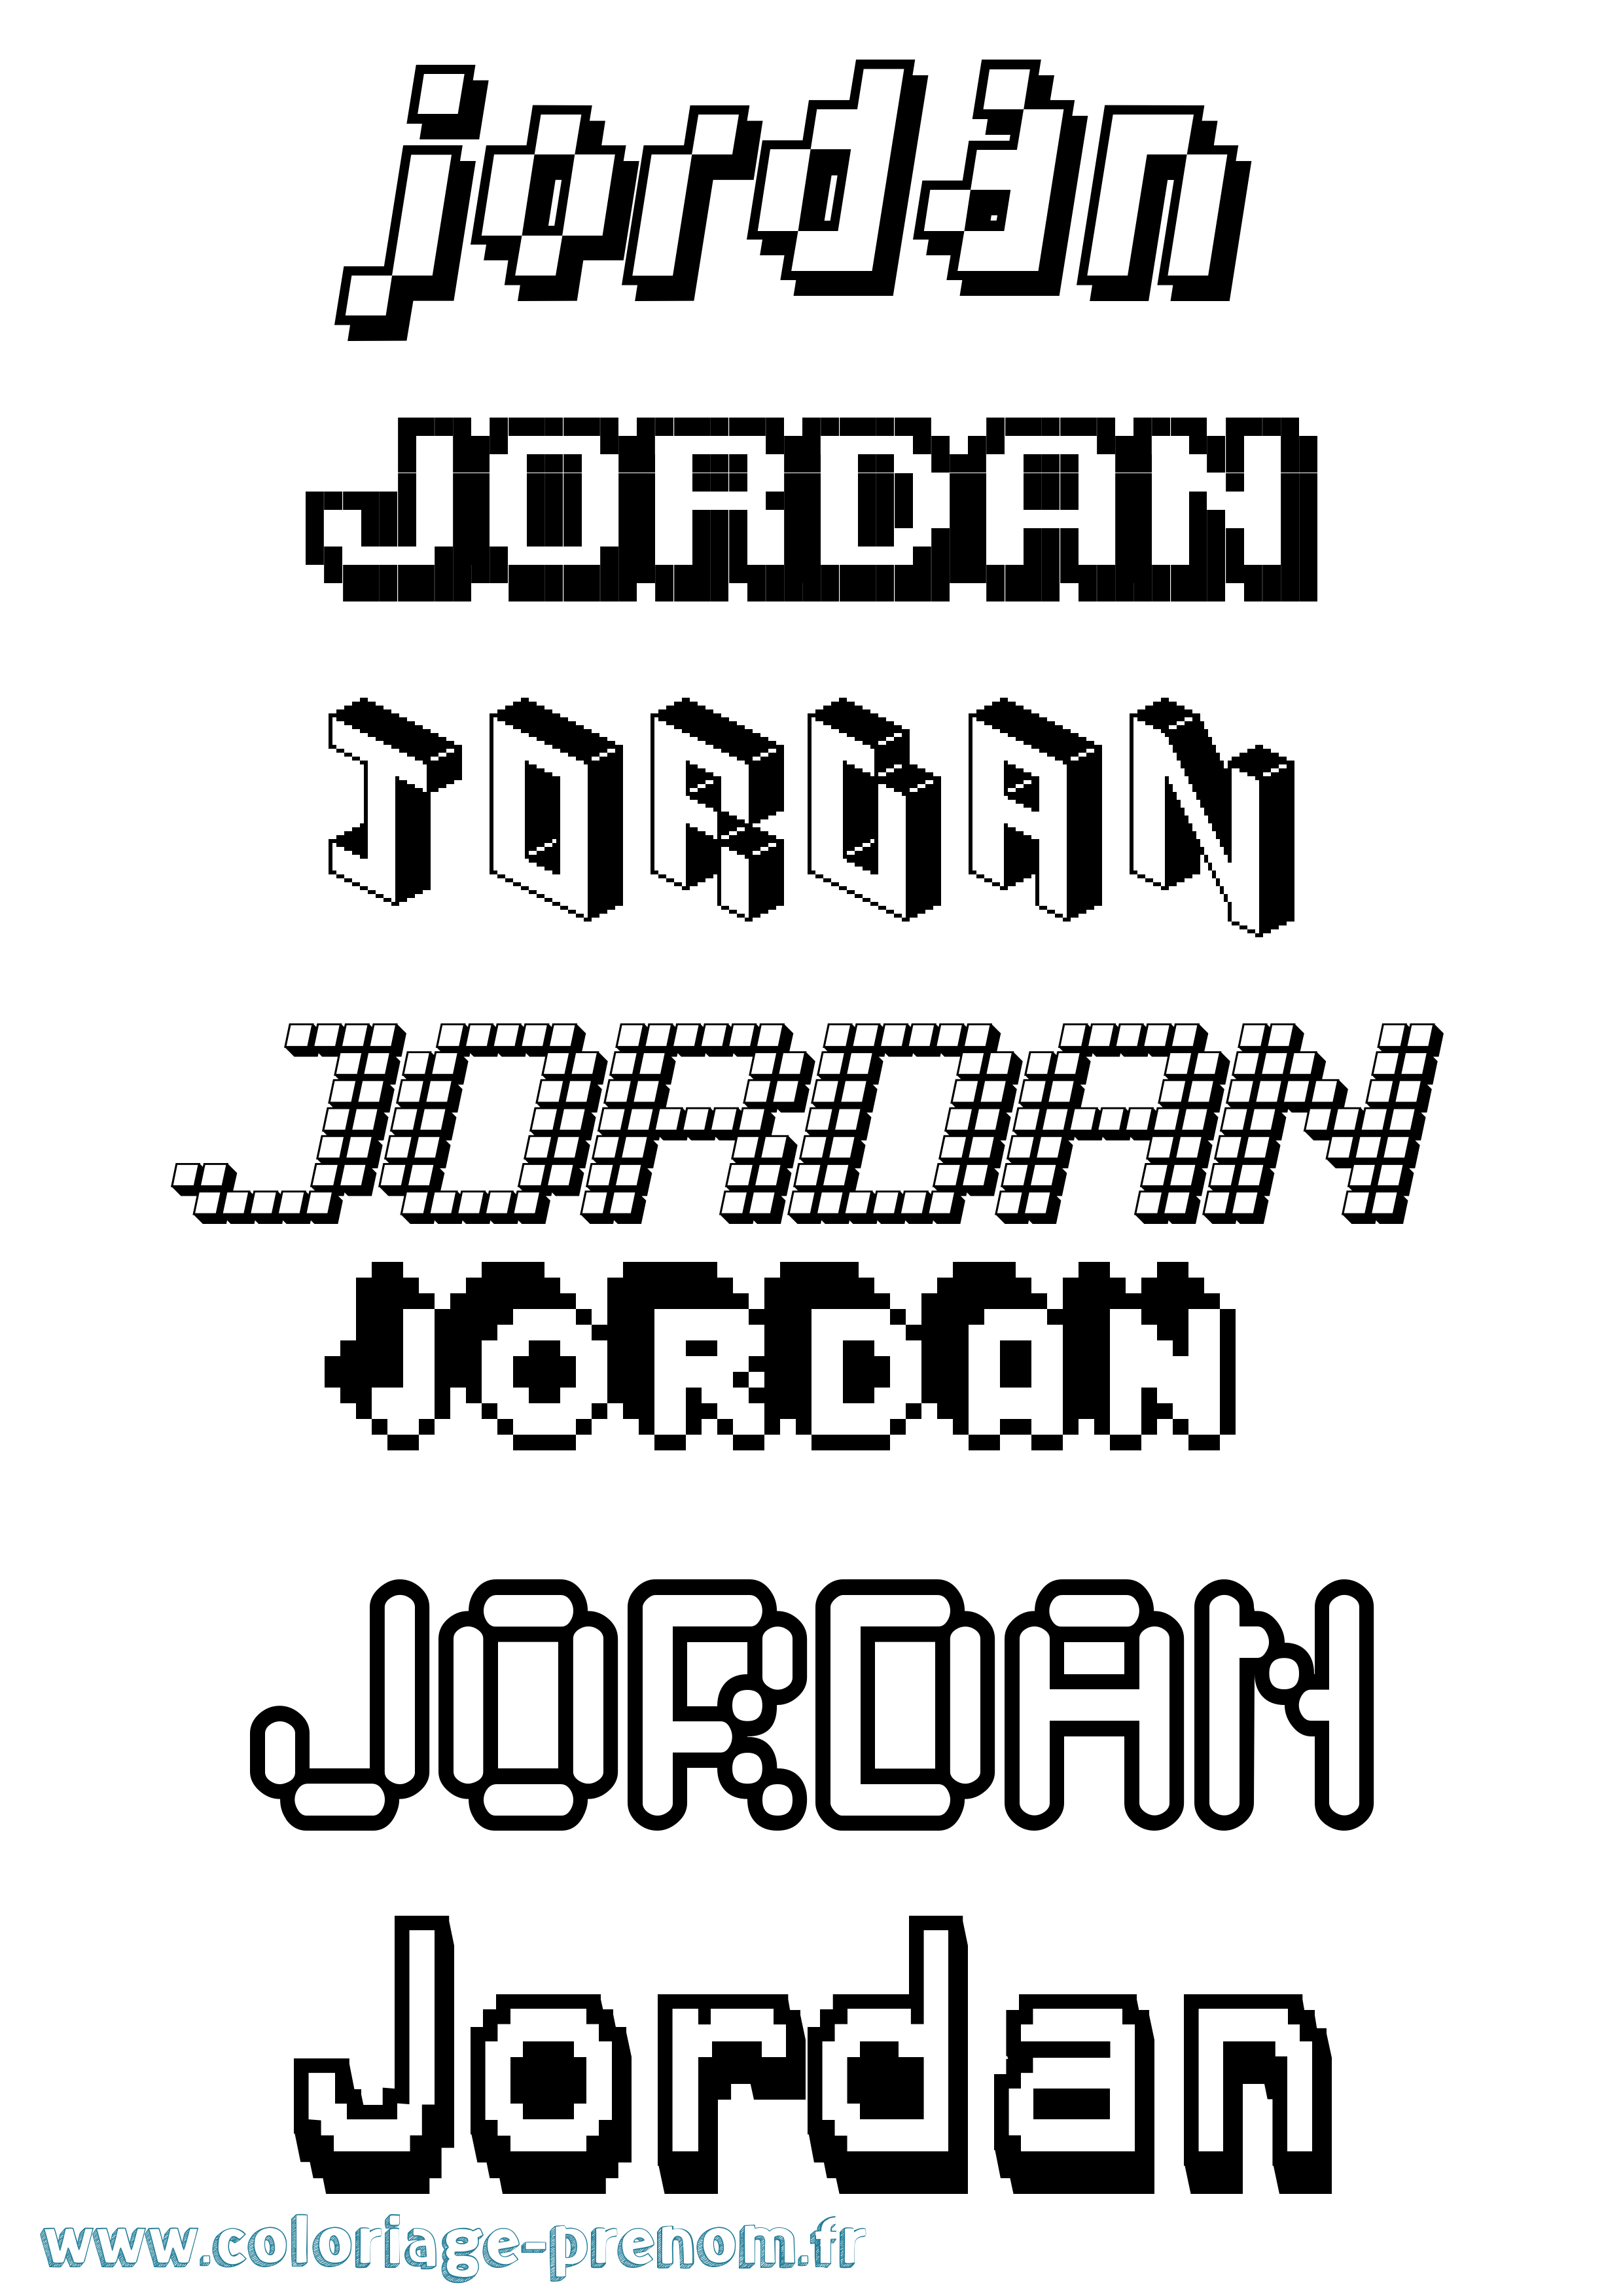 Coloriage prénom Jordan Pixel